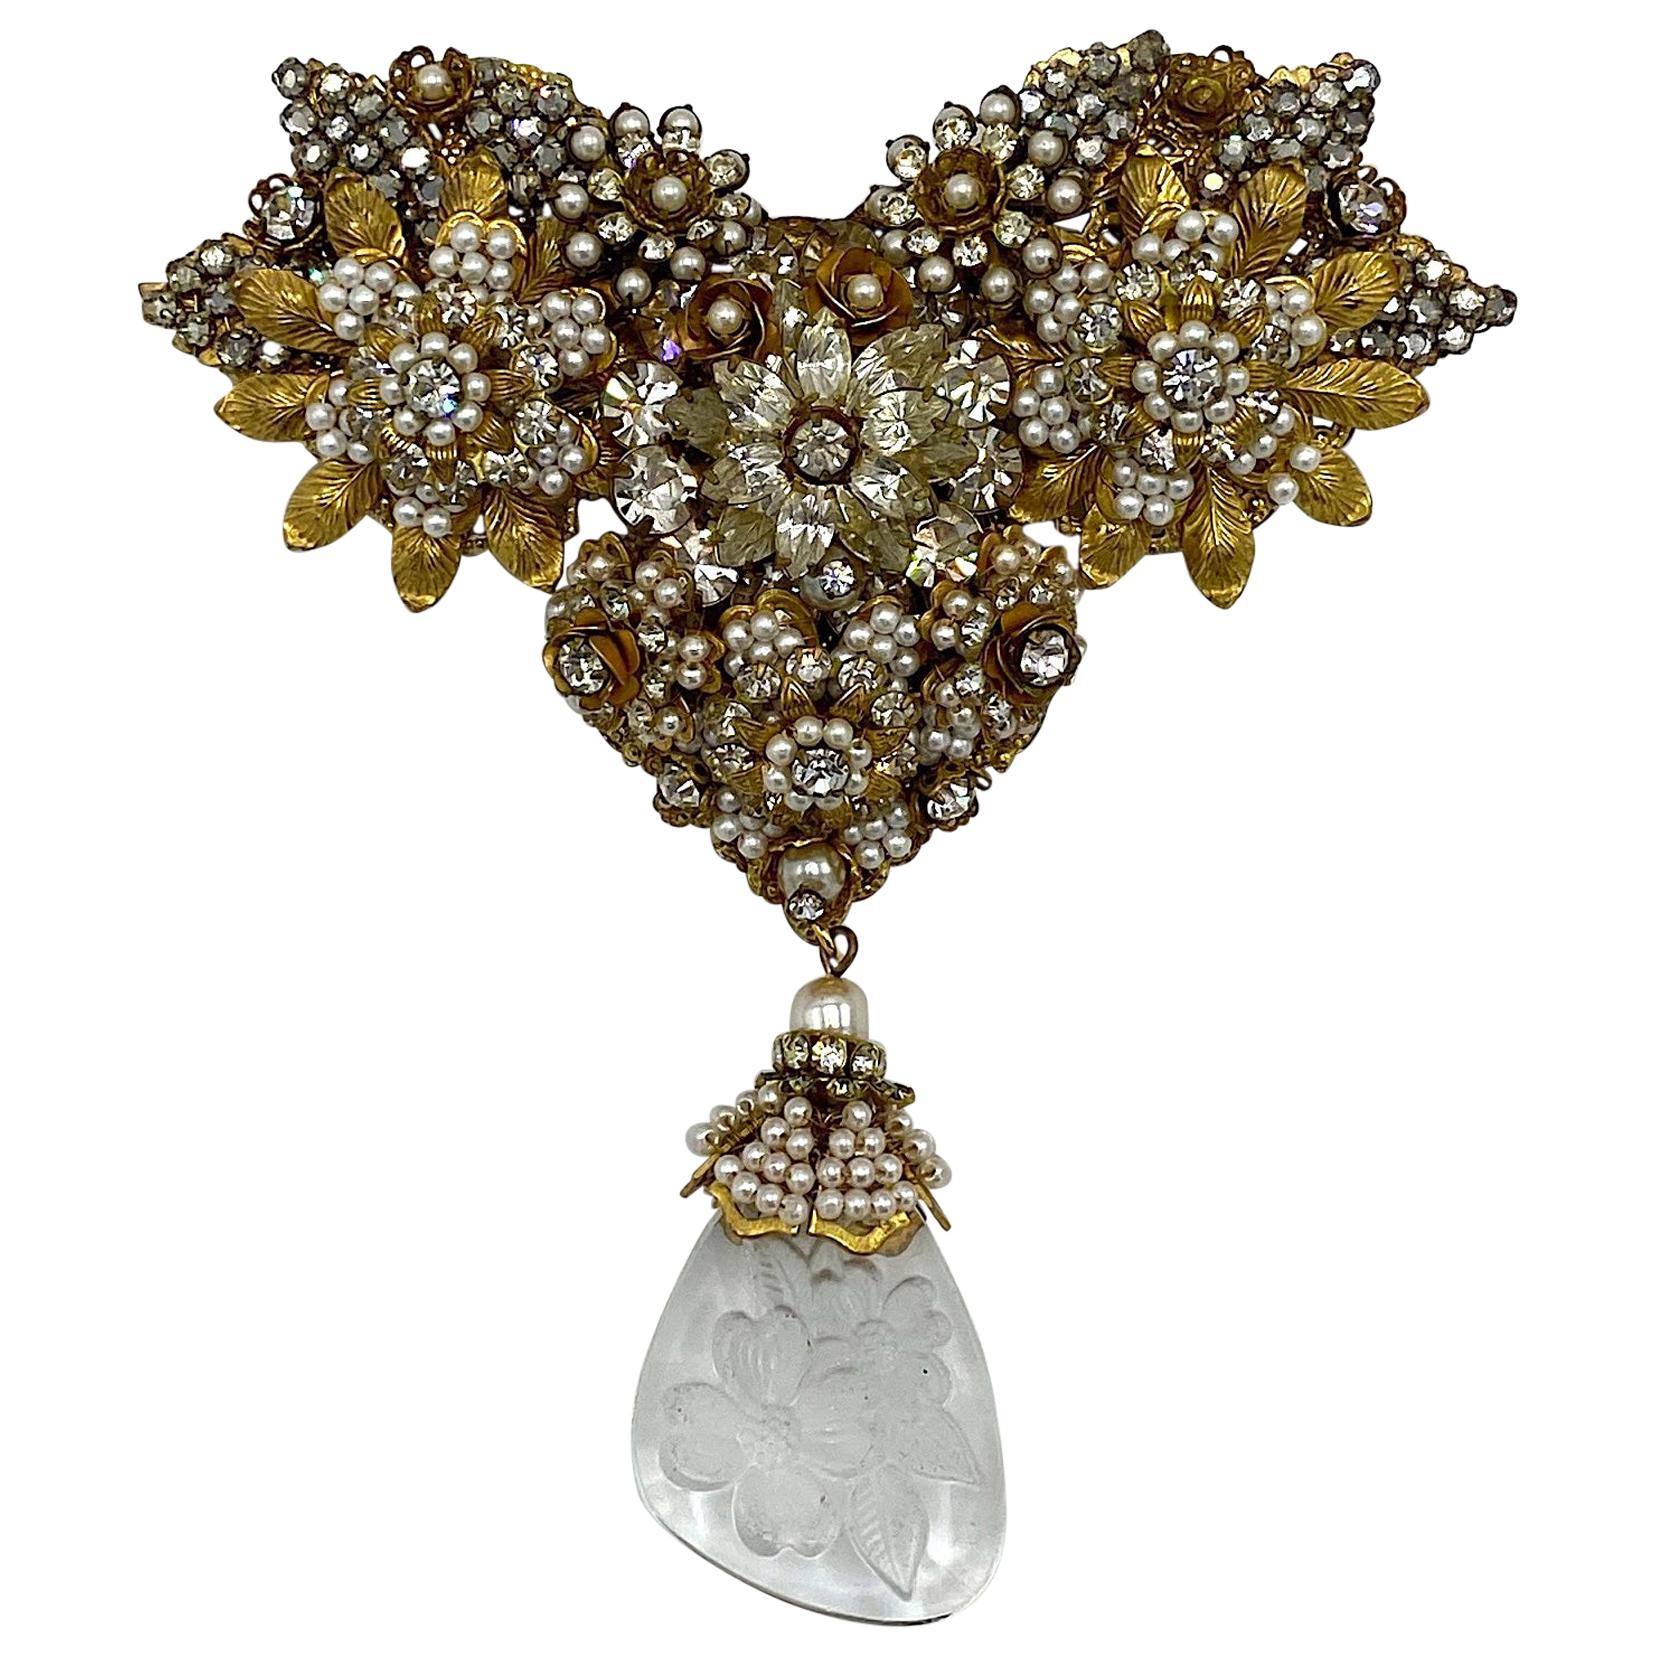 Robert DeMario Huge Gold and Seed Pearl Glass Brooch circa 1960